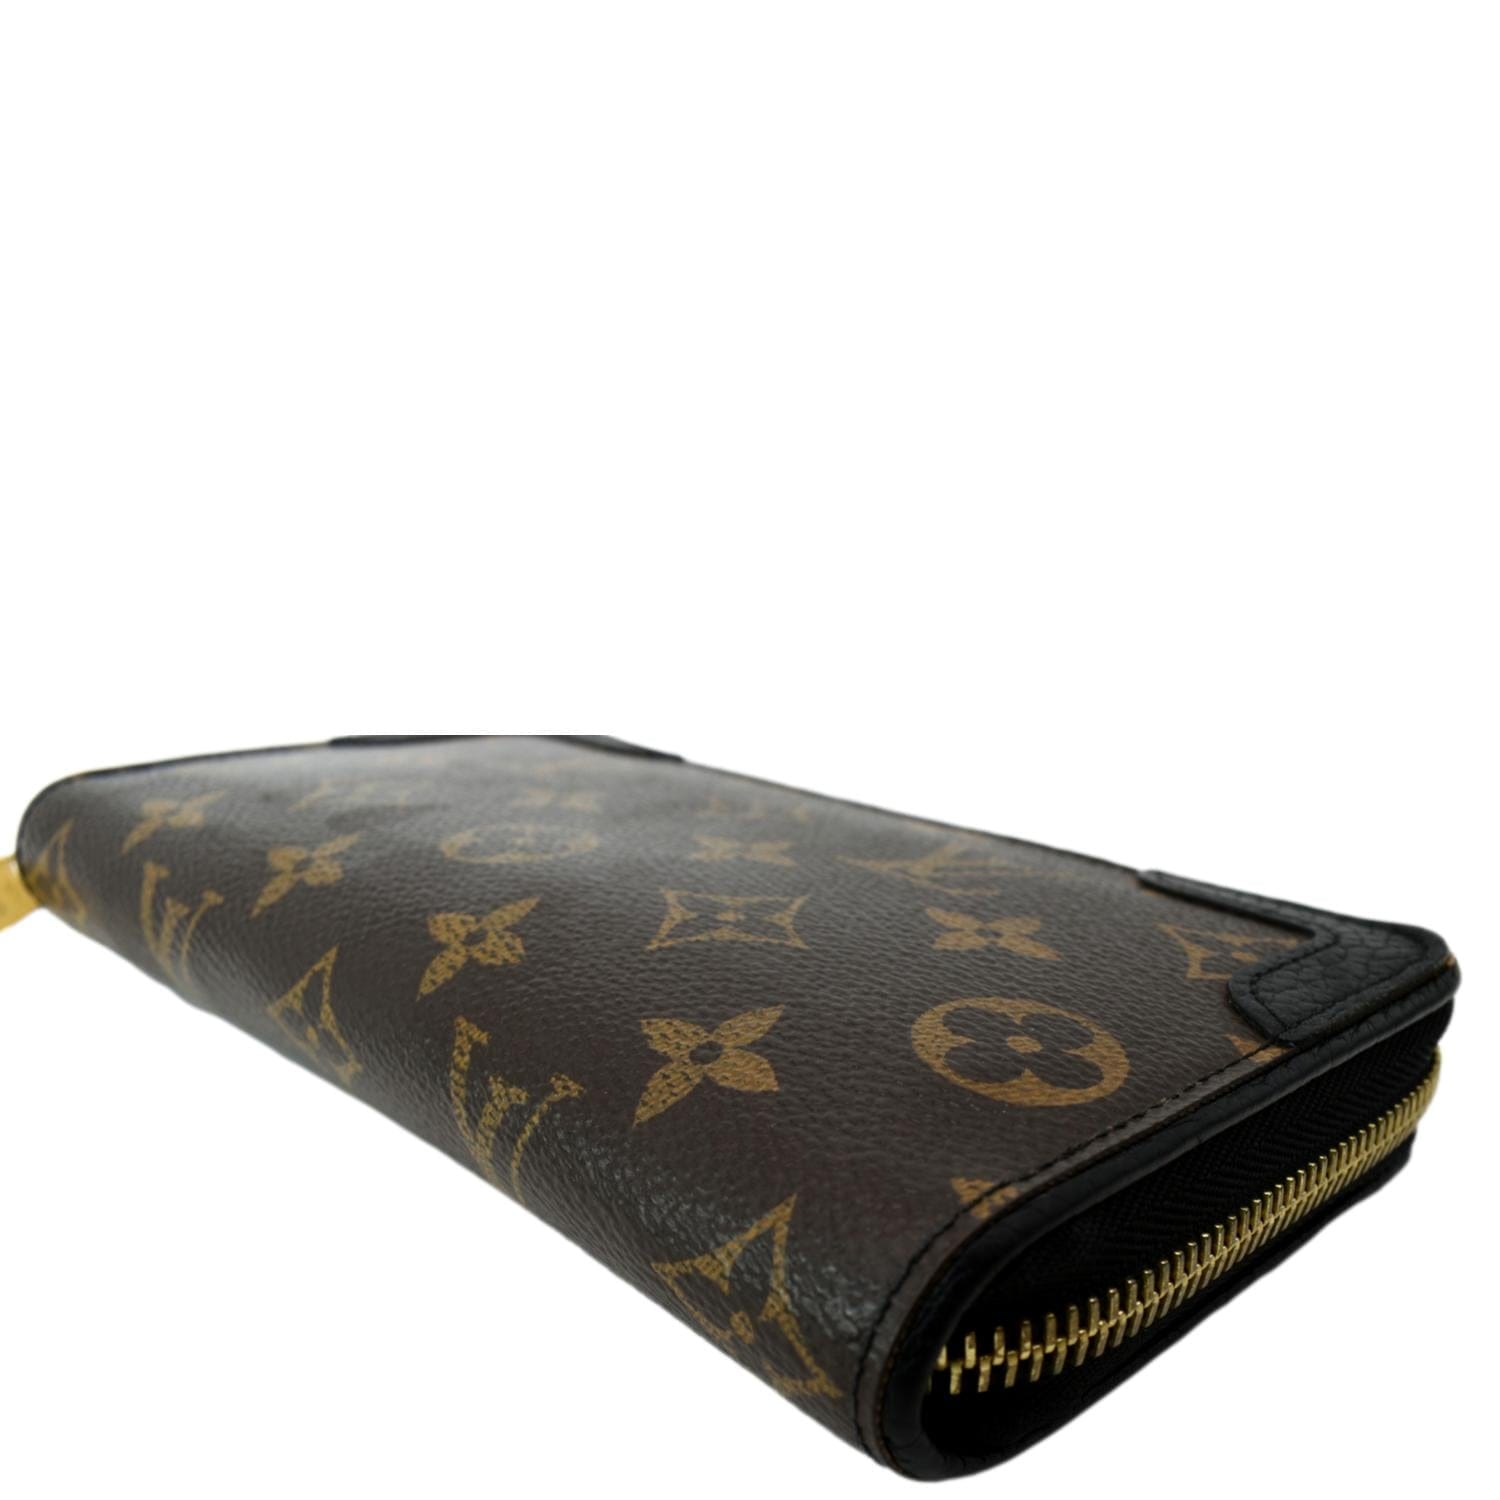 Louis Vuitton "Zippy Wallet" Box, Dustbag, Ribbon in Ex Cond! -  Free Ship USA